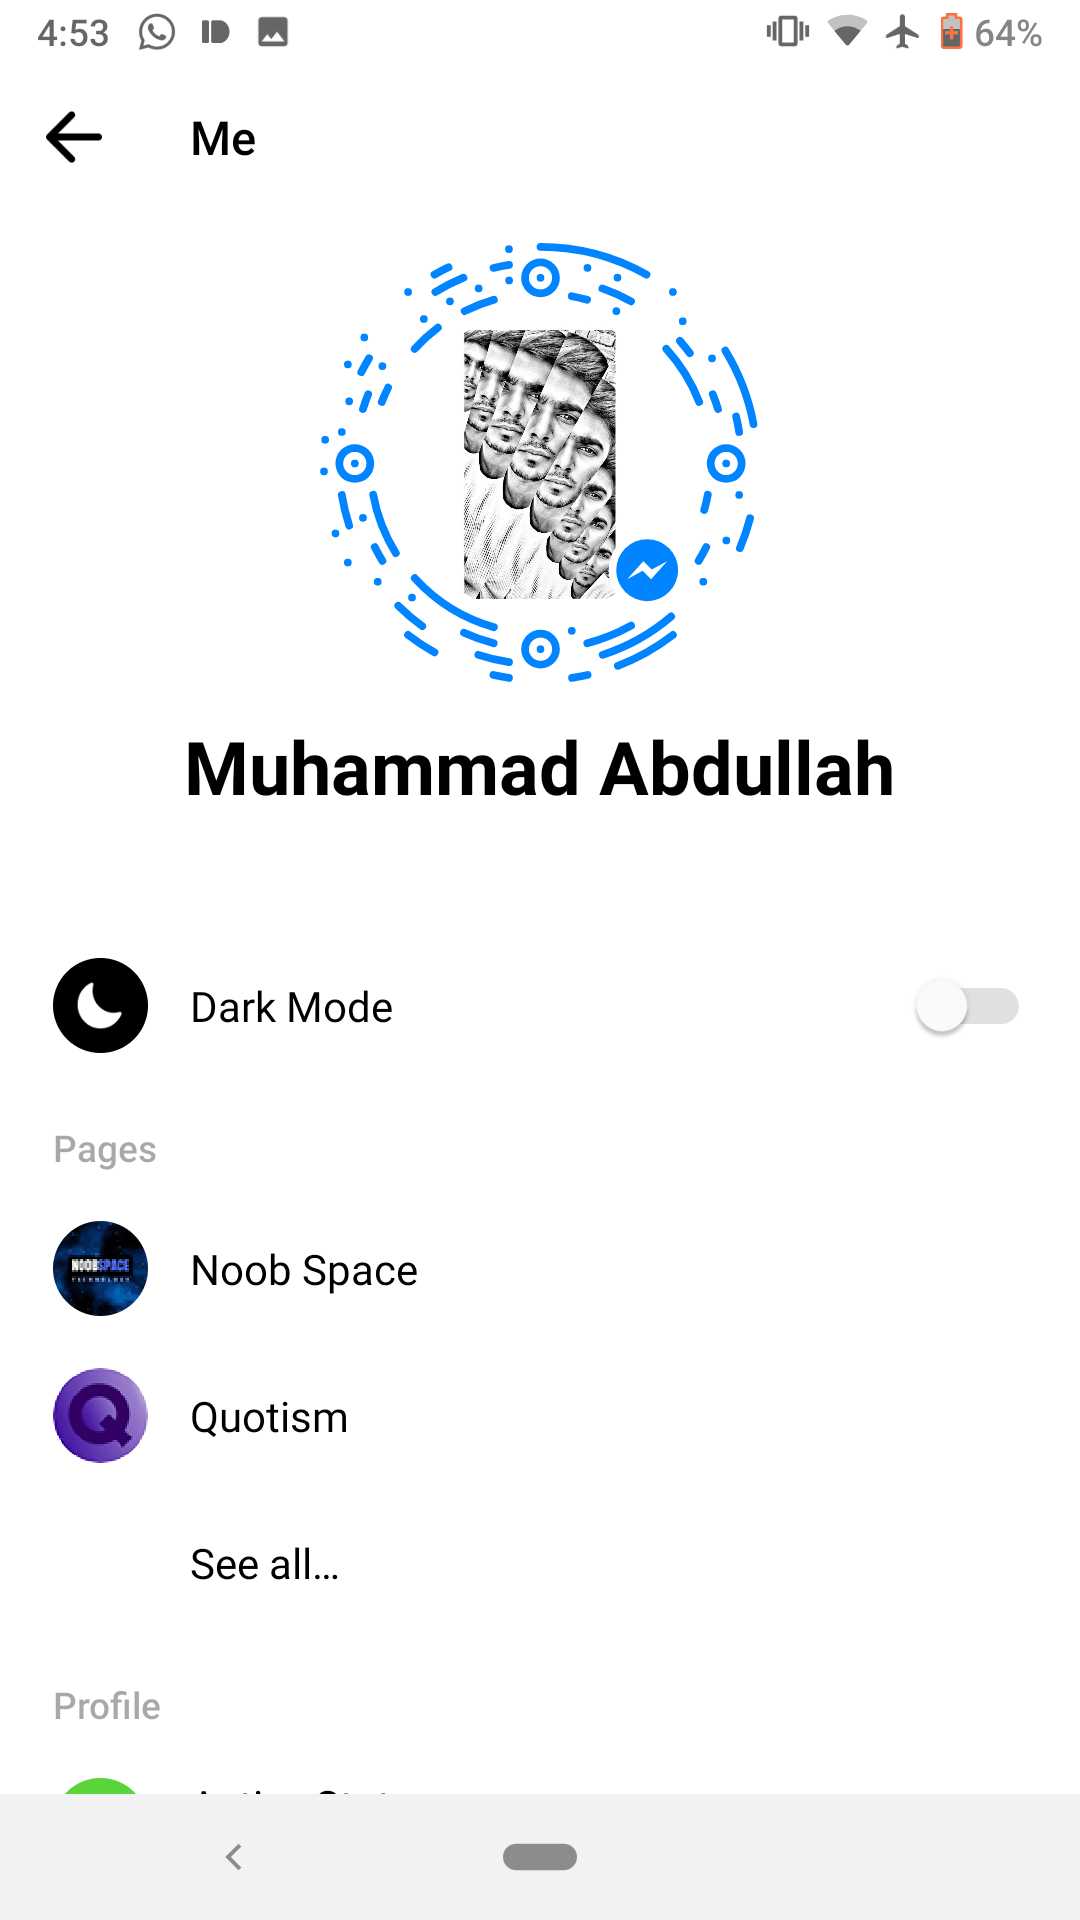 A Screenshots Of Dark Mode Toggle Button Settings In Facebook Messenger